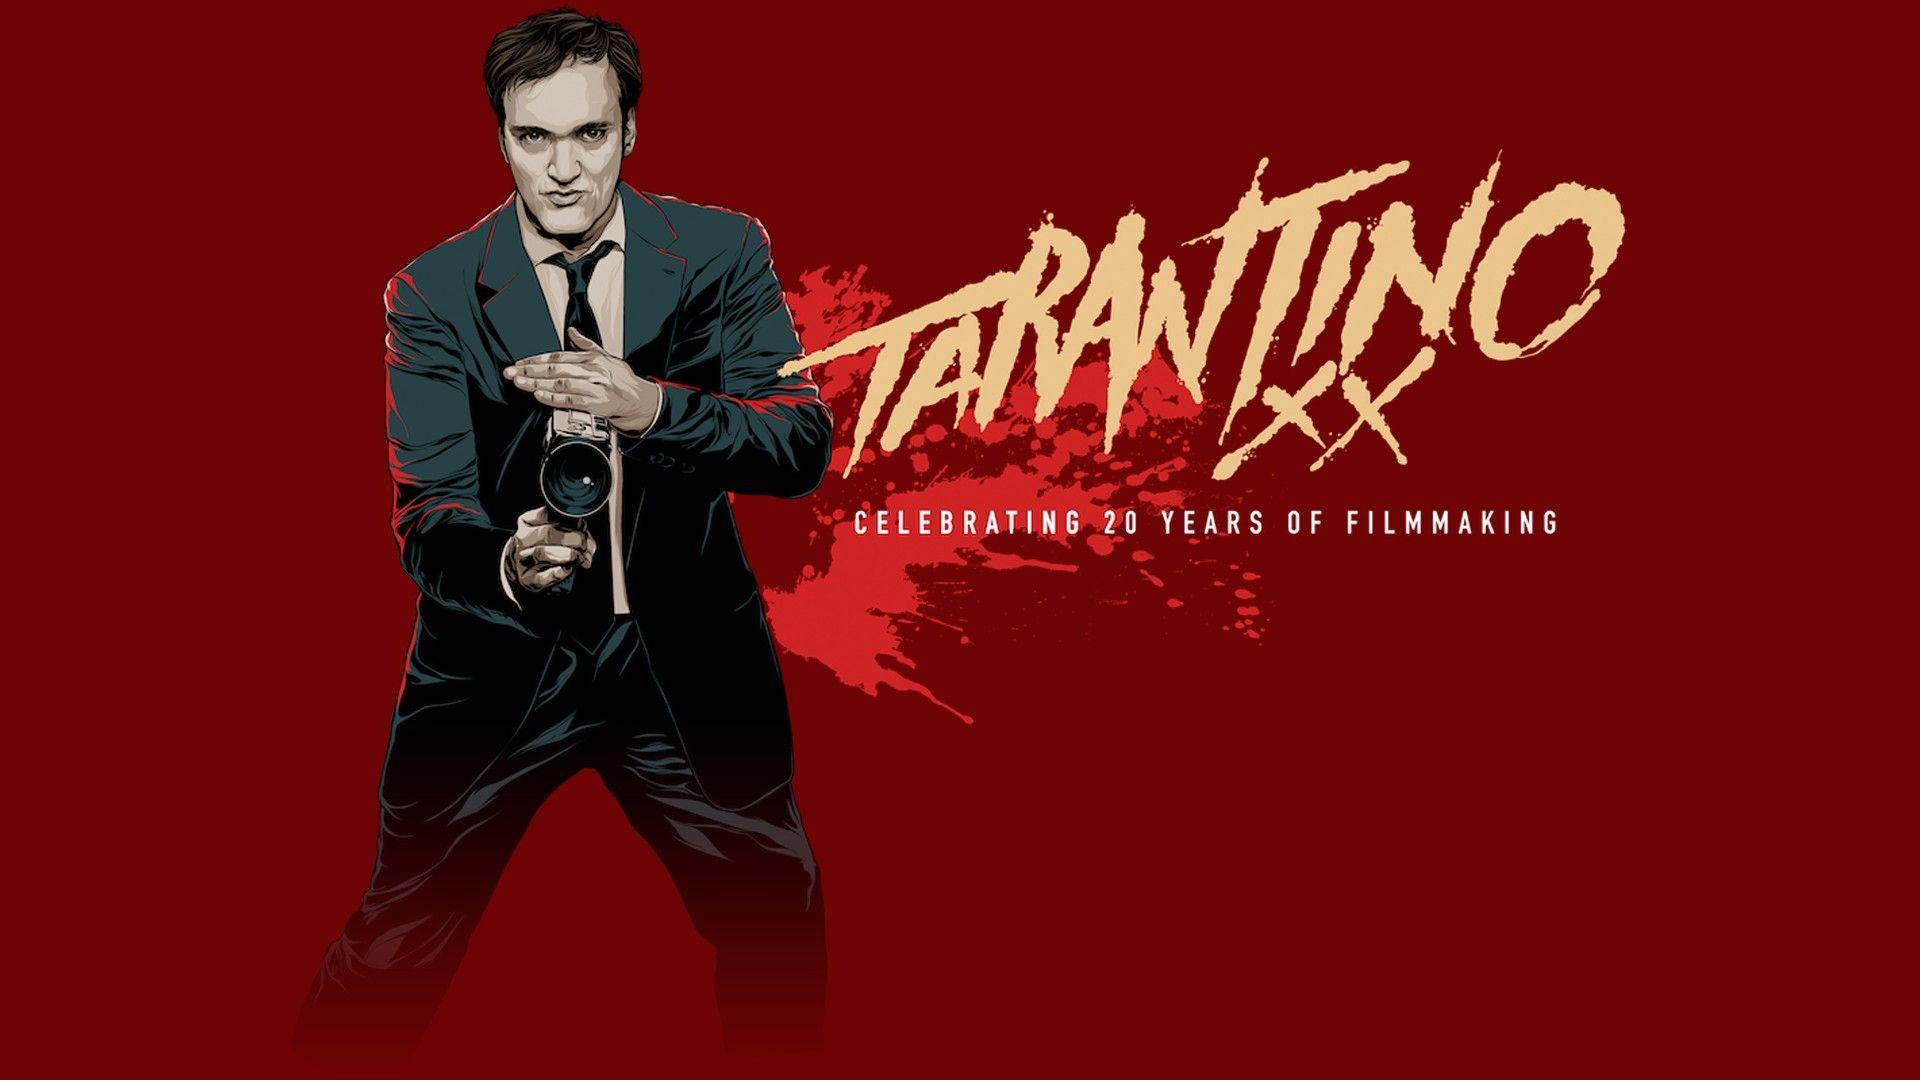 Quentin Tarantino HD Wallpaper for desktop download